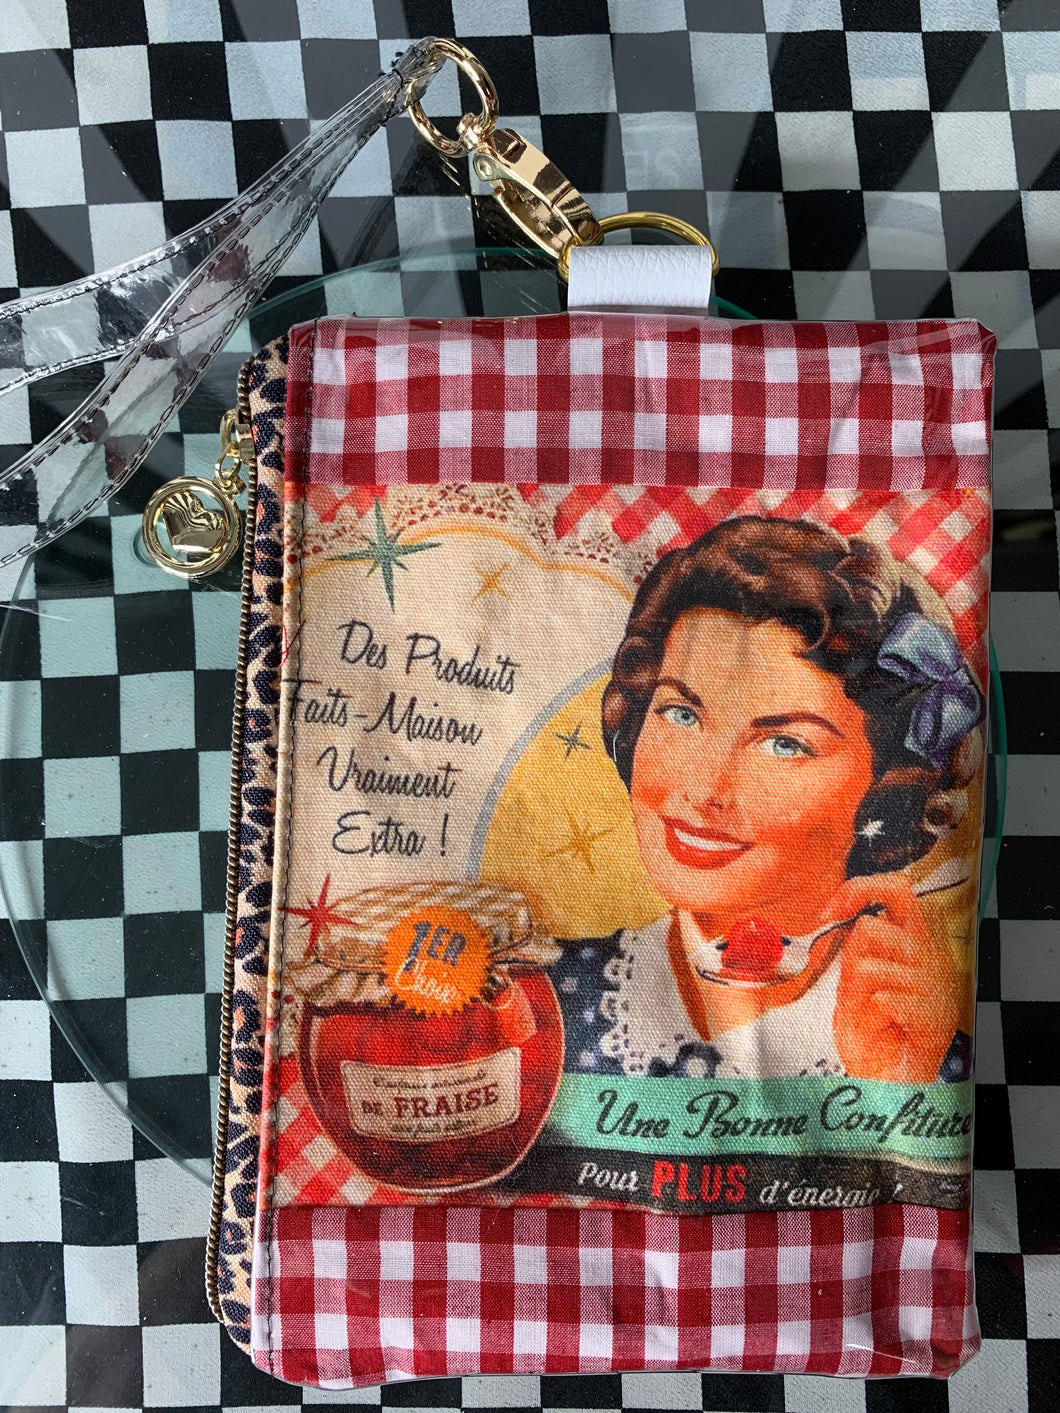 Vintage jam advertising wristlet bag